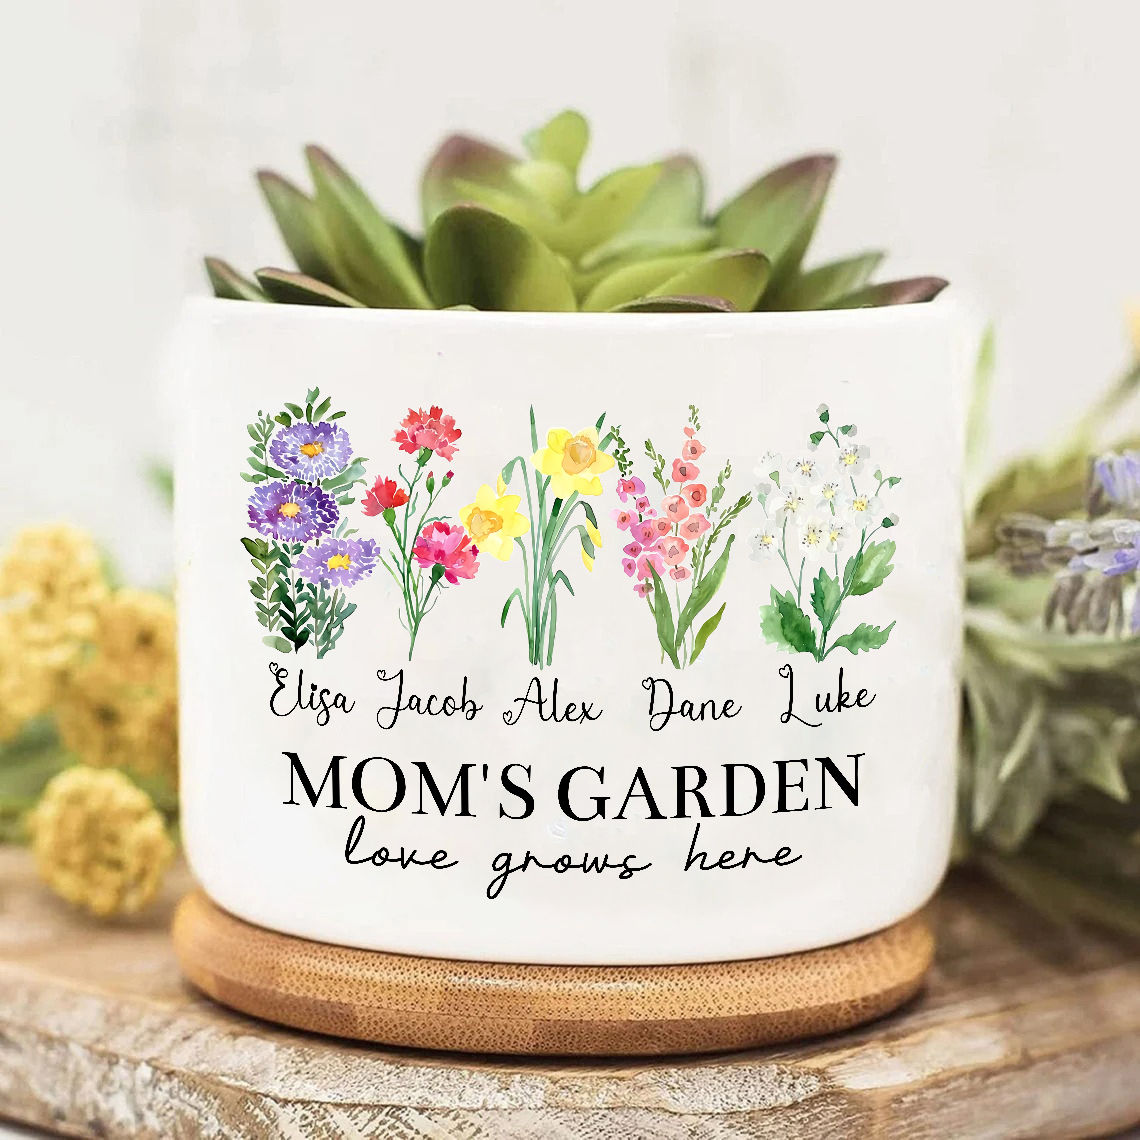 Mother's Day Gift - Personalized Grandma's Garden Flowers Plant Pot, Custom Mom's Garden Flower Pot, Happy Mother's Day Gift From Grandkids Name, Grandma's Birthday Gift29919